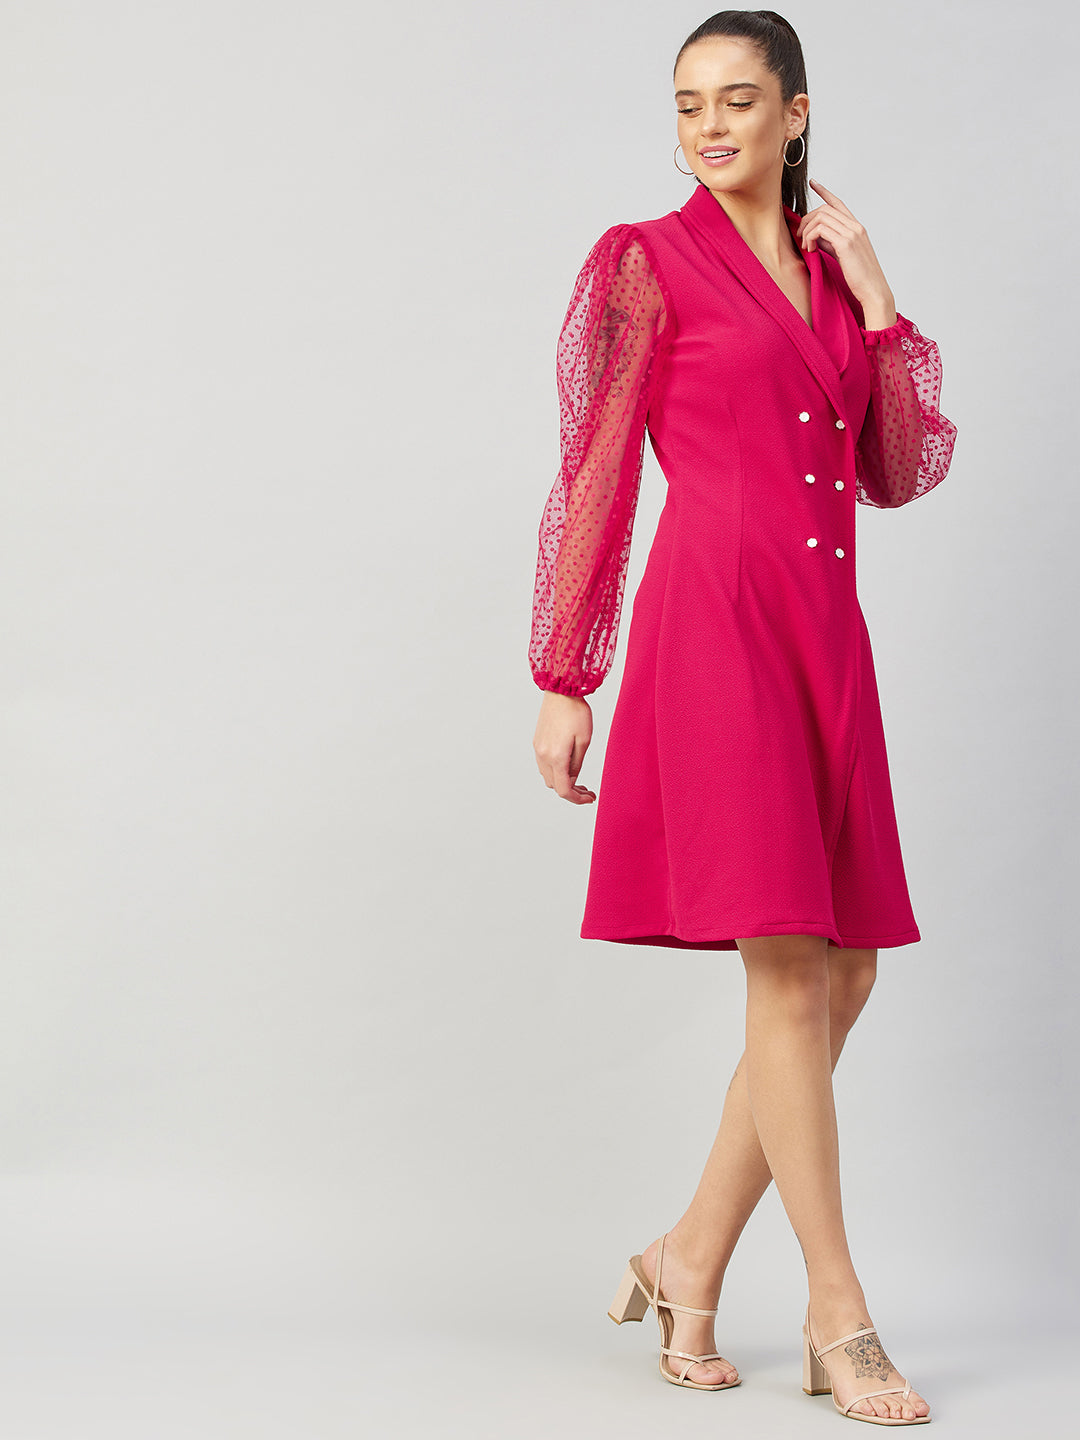 Athena Fuchsia Lace A-line Dress - Athena Lifestyle